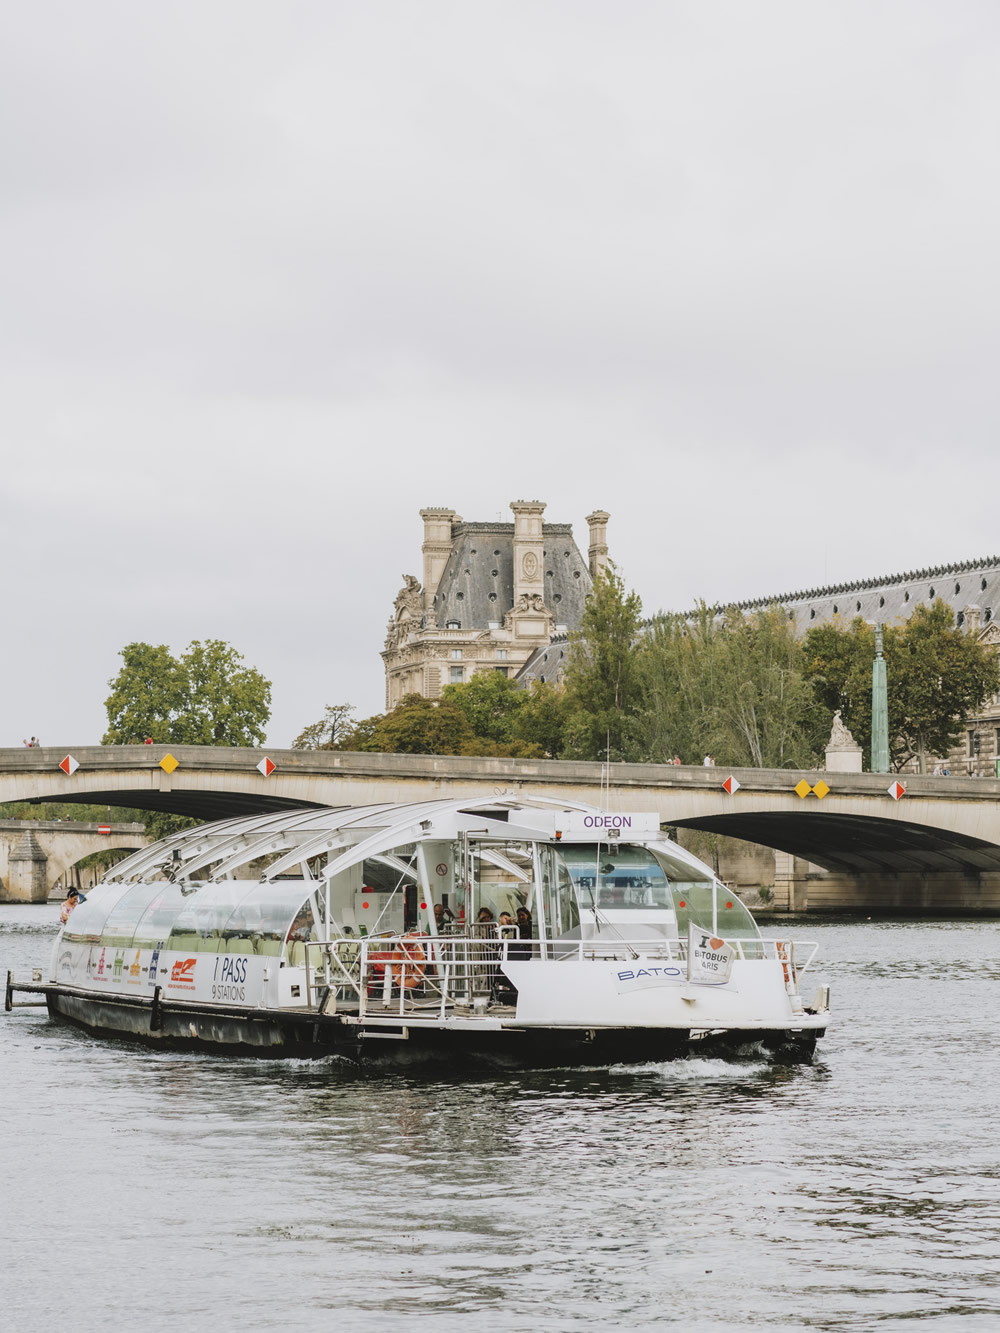 Batobus Paris or water taxi on the Seine